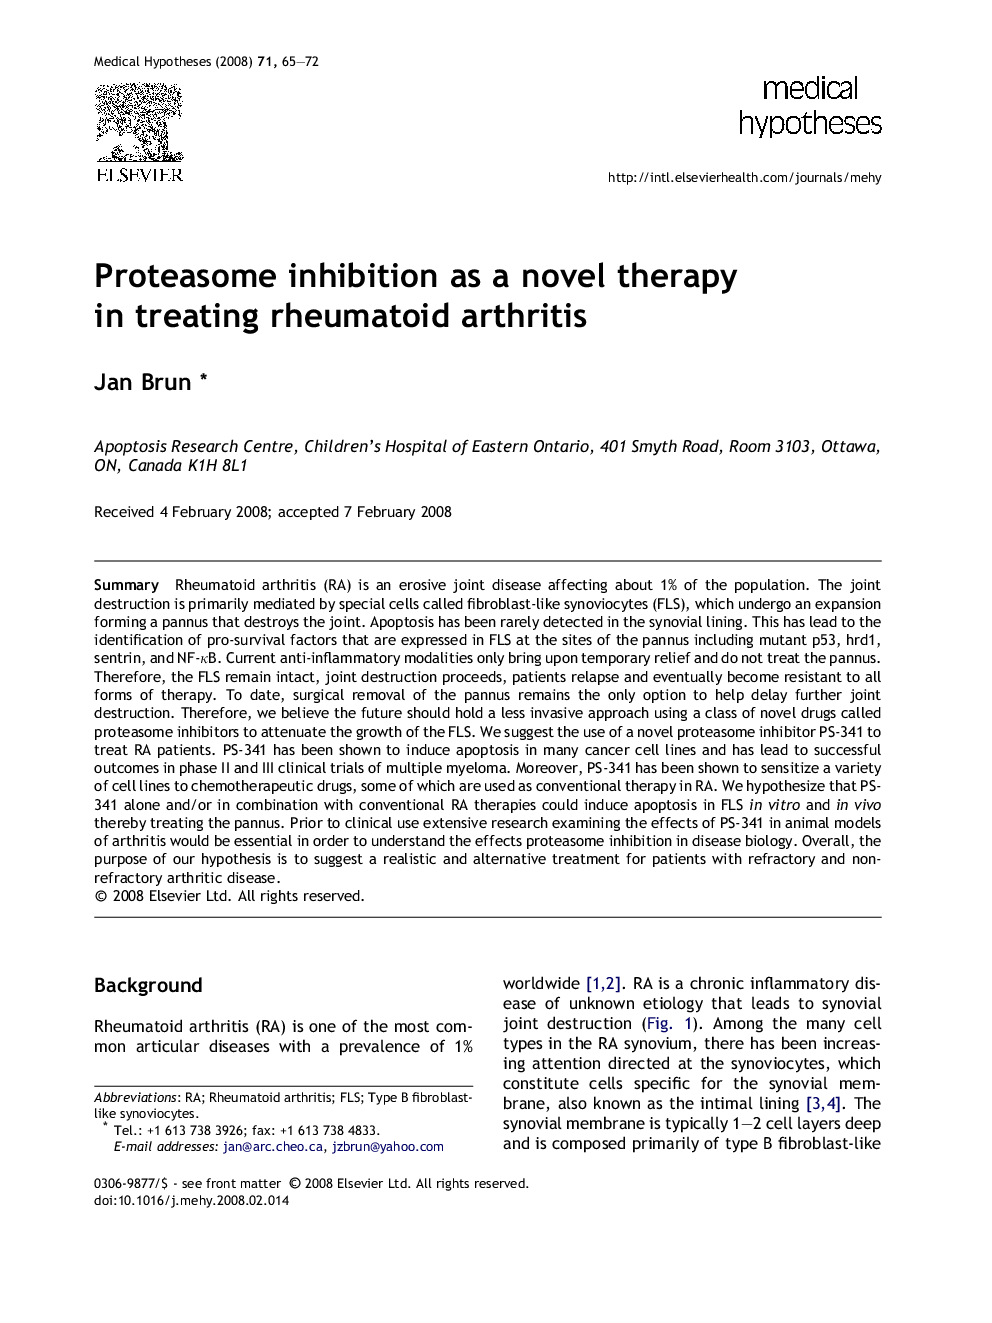 Proteasome inhibition as a novel therapy in treating rheumatoid arthritis